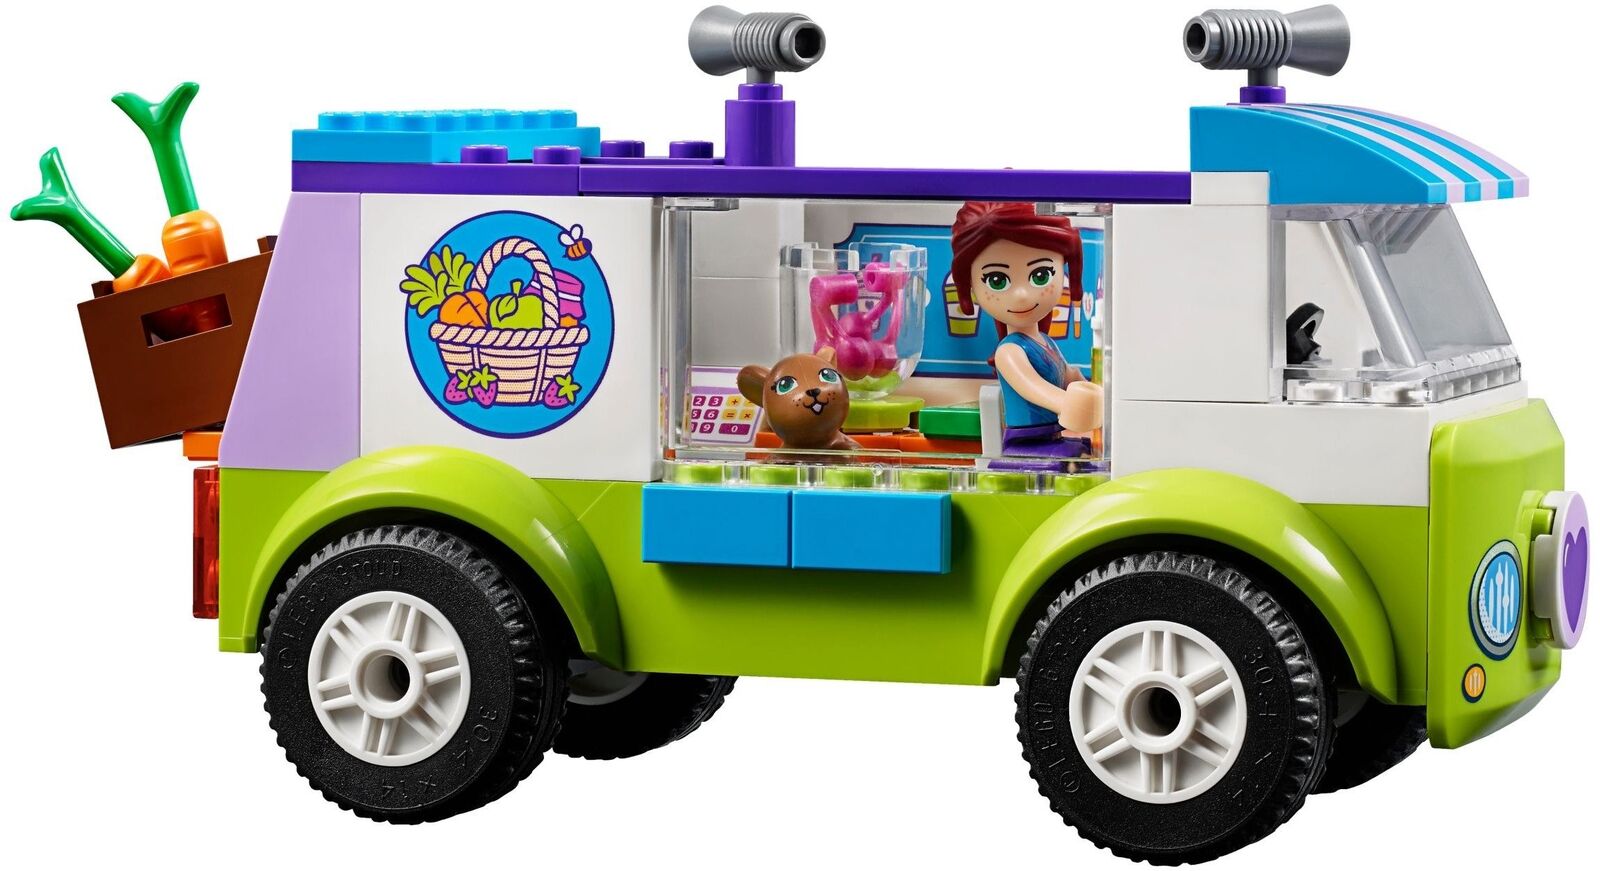 LEGO Junior Friends "Mia's Smoothie Wagon" 10749